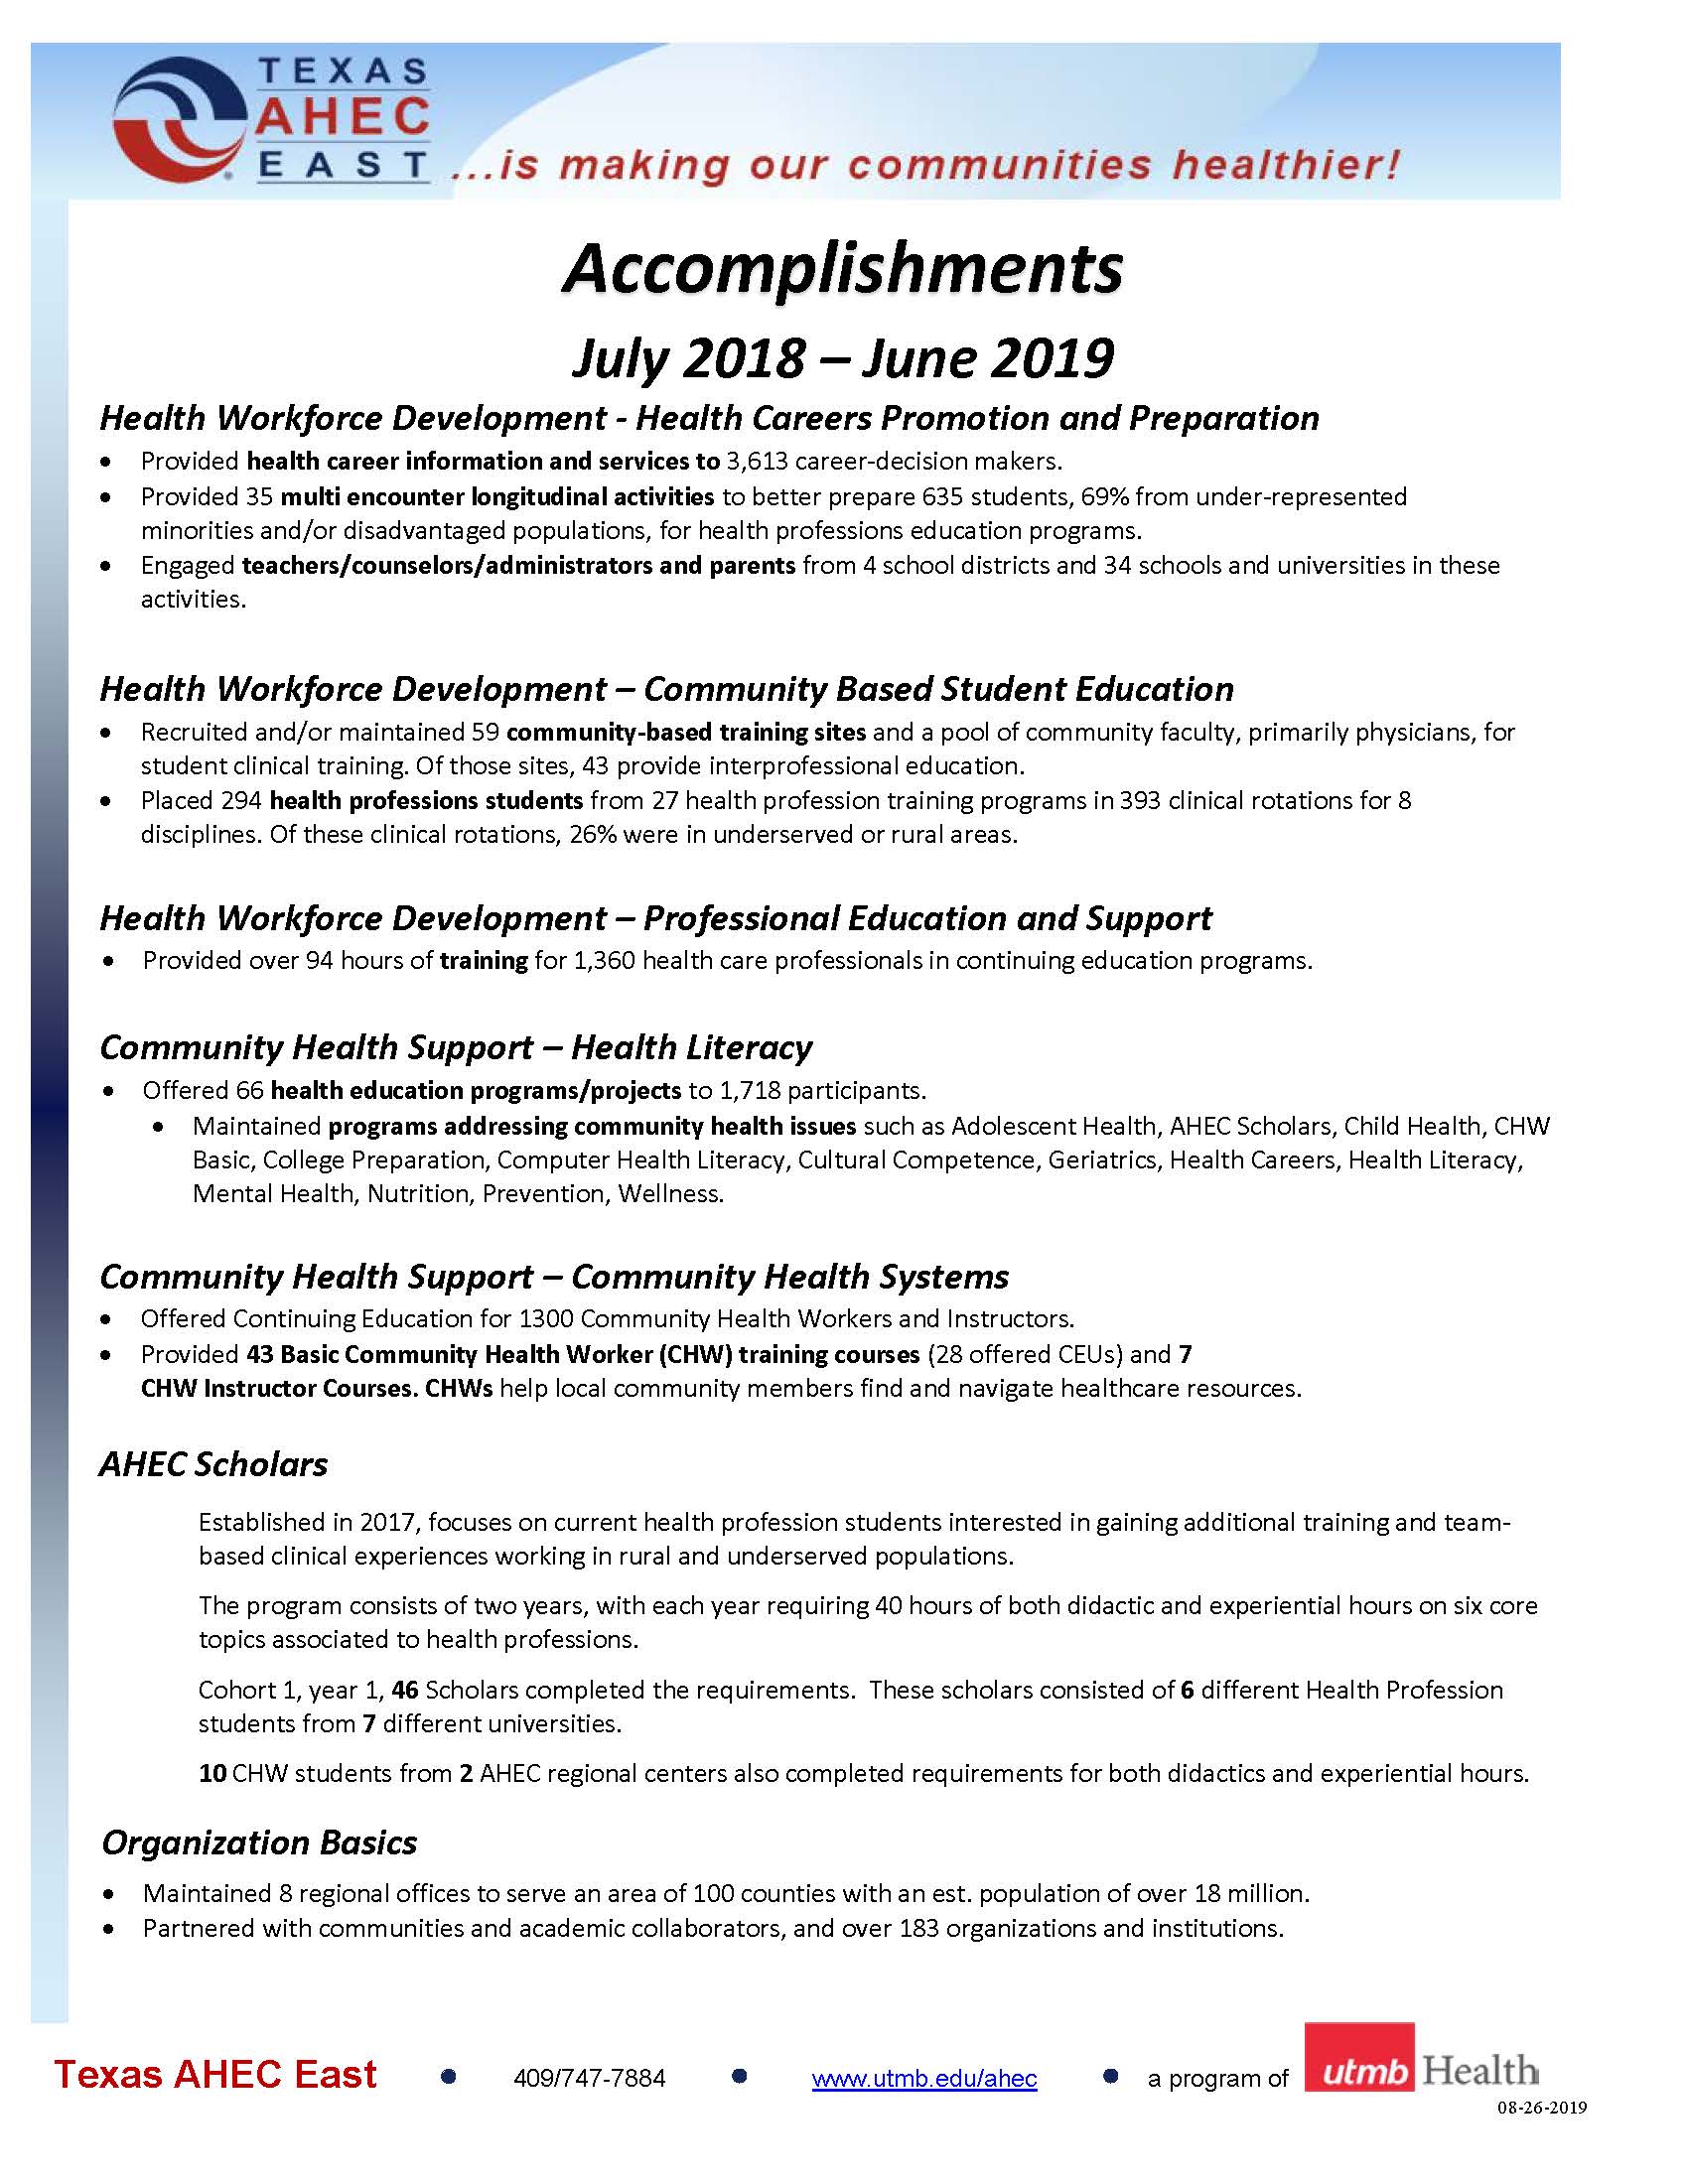 Accomplishments 2018-2019 cas edits v2_